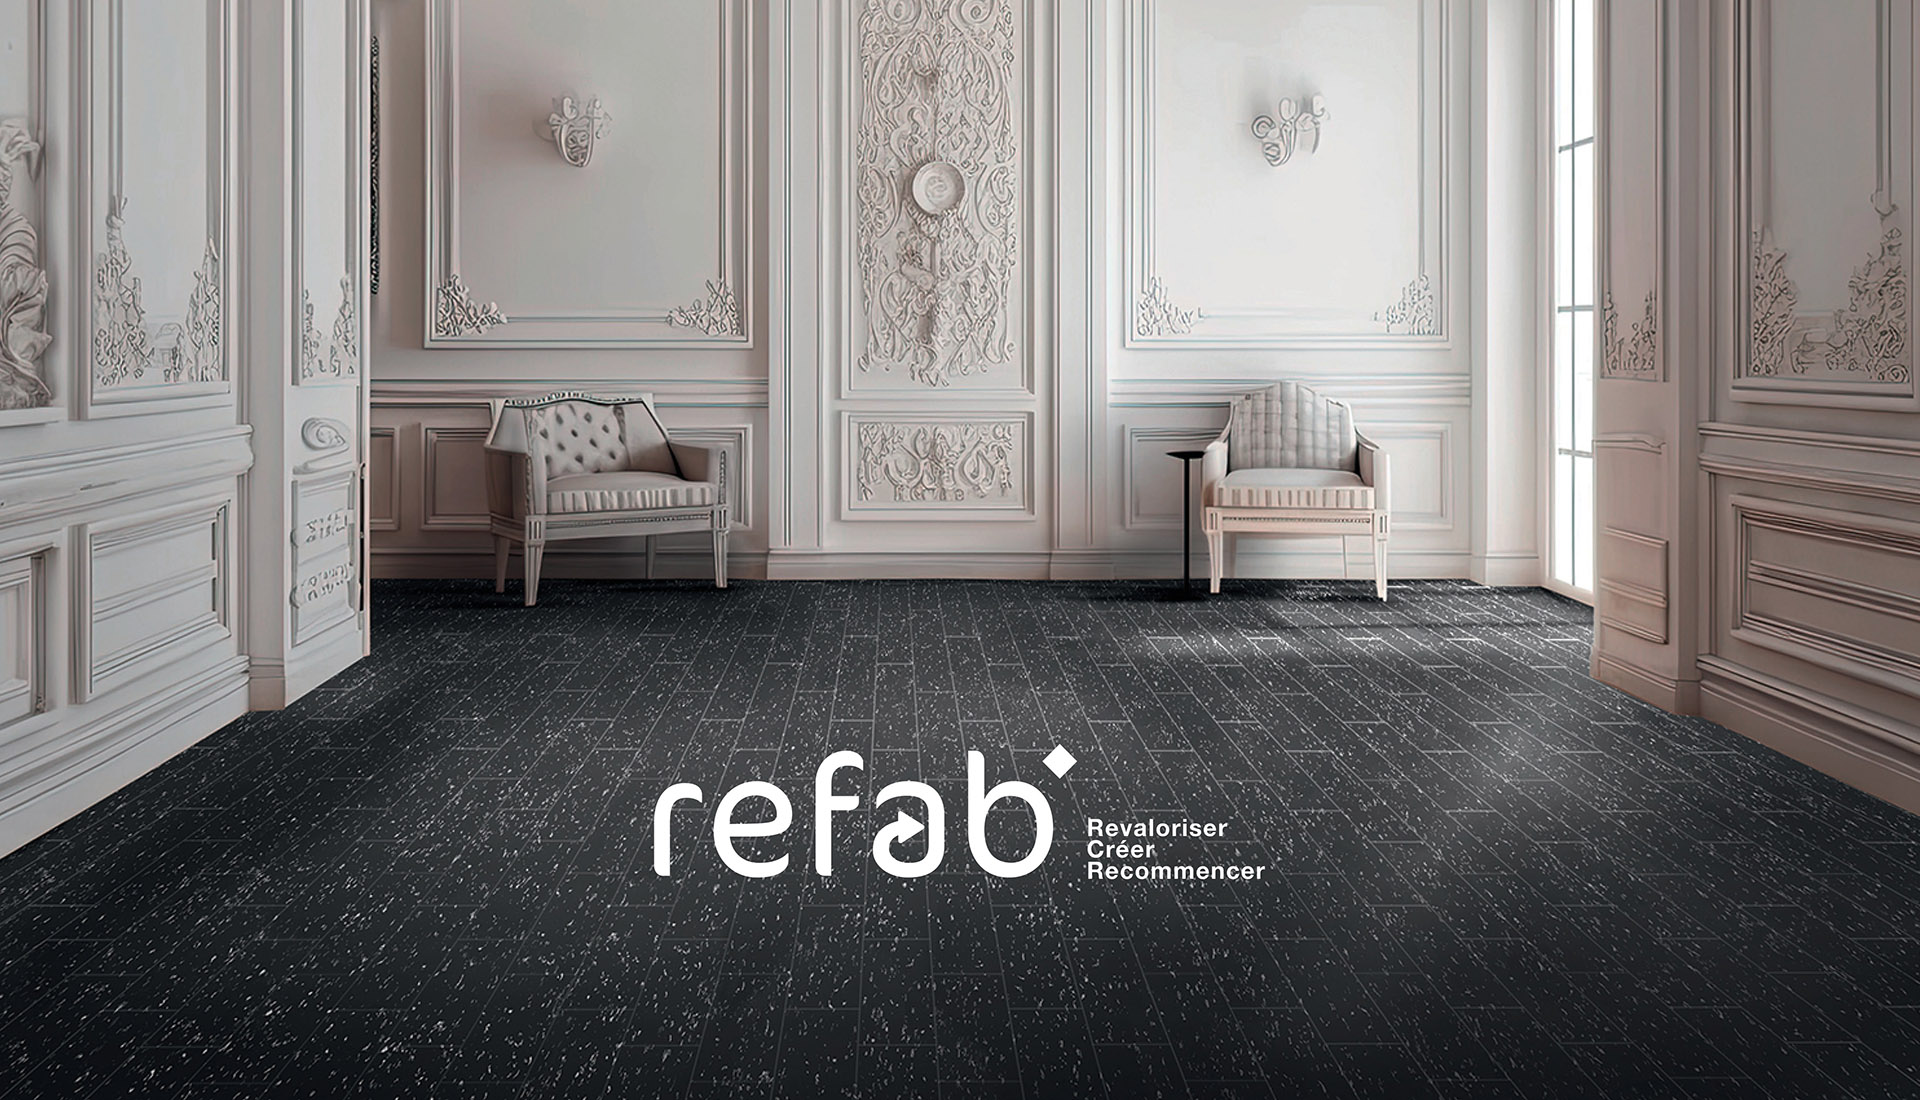 REFAB-panels-and-slats-on-floor-soft-surface Refab